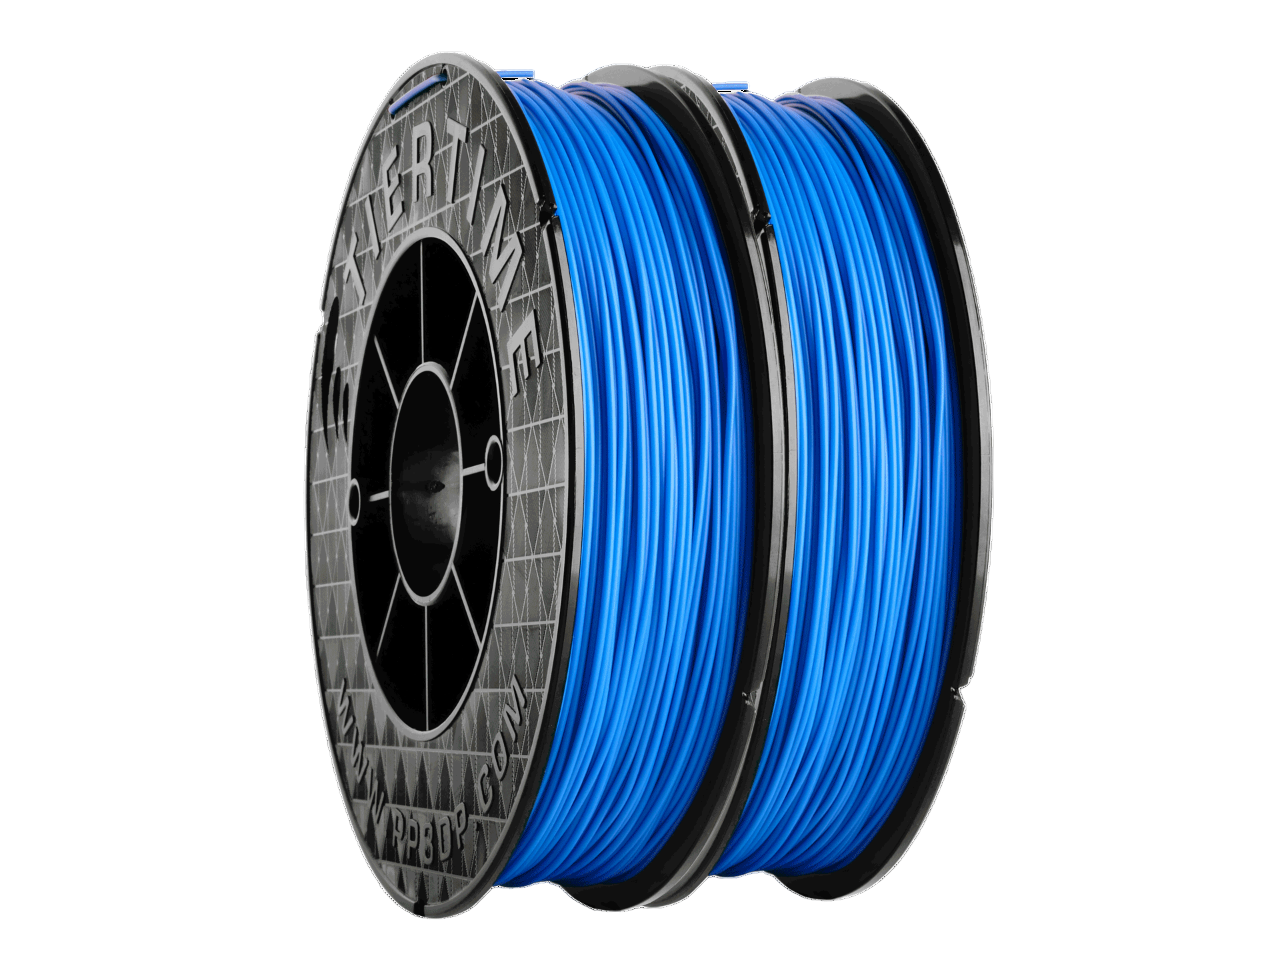 ABS filament for 3D Printers Bestfilament. Color light blue. 1 kg. $24.30